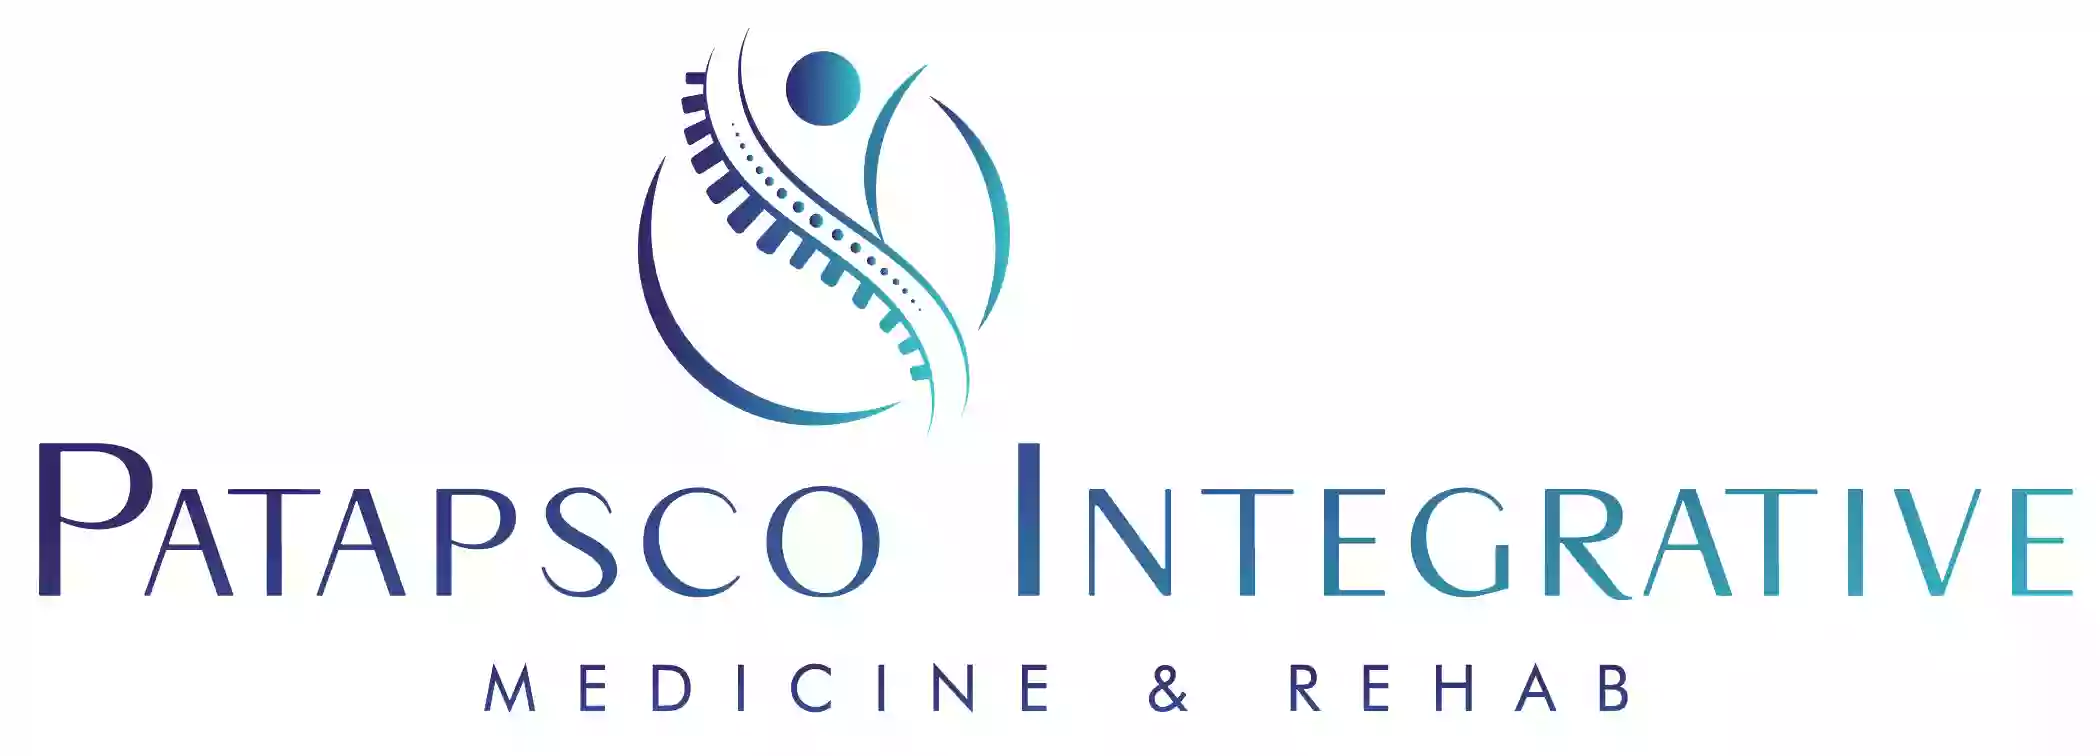 Patapsco Integrative Medicine & Rehab